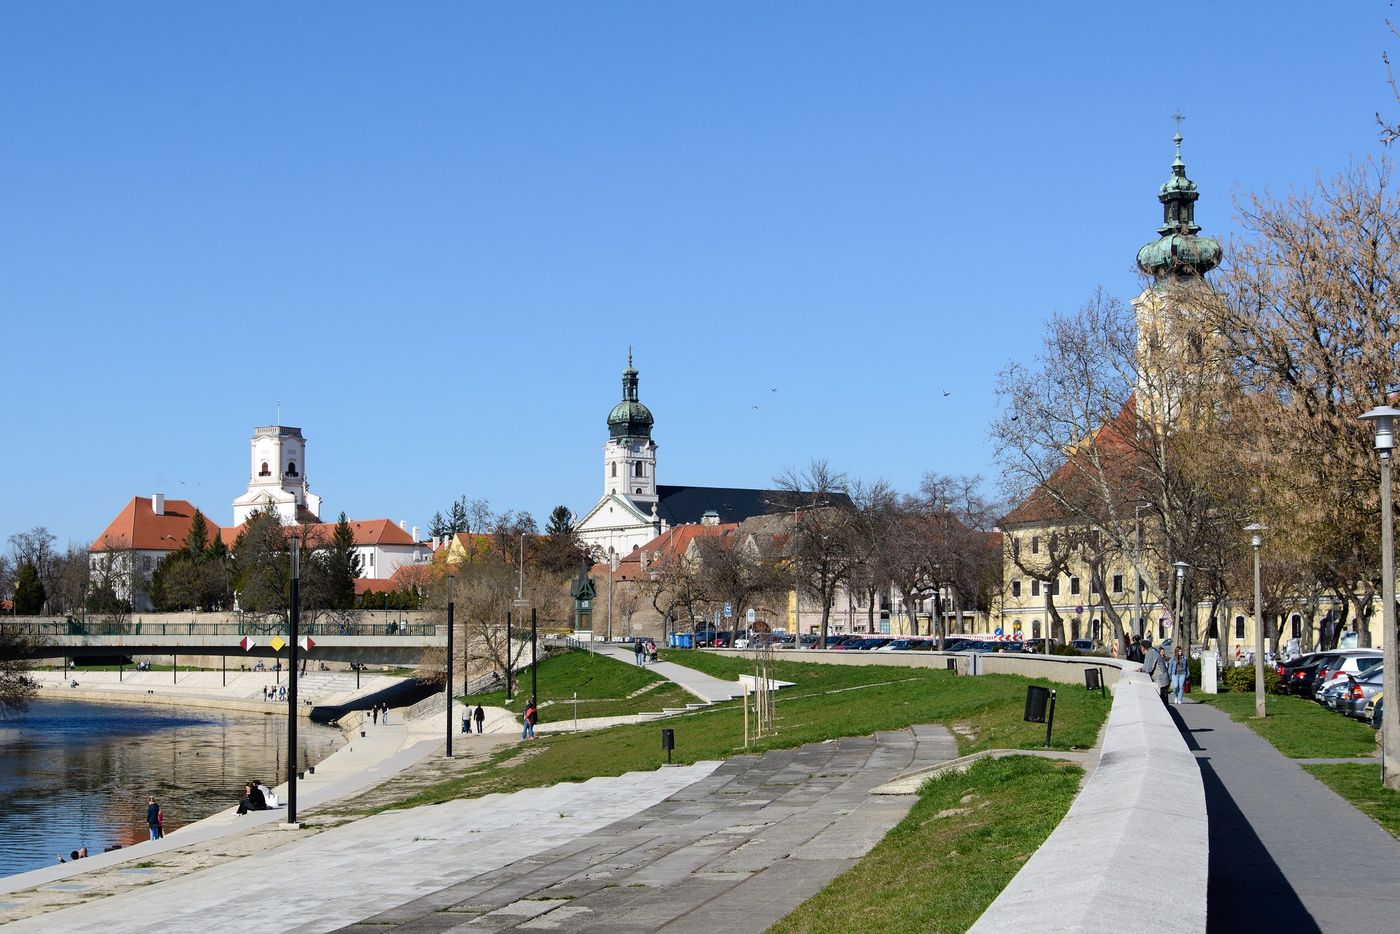 Győr: Where history meets modernity